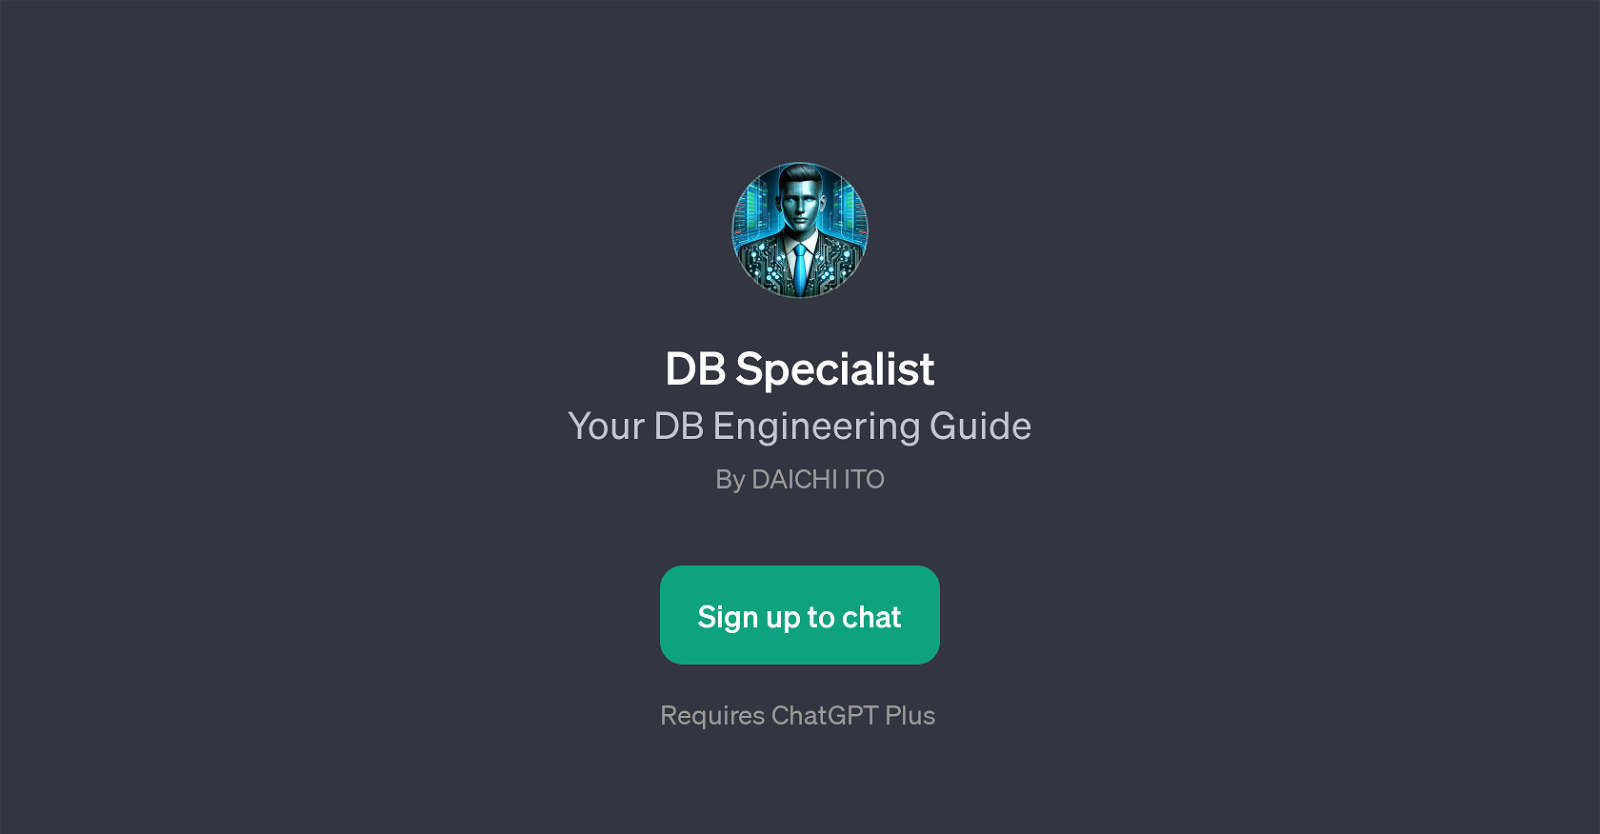 DB Specialist website